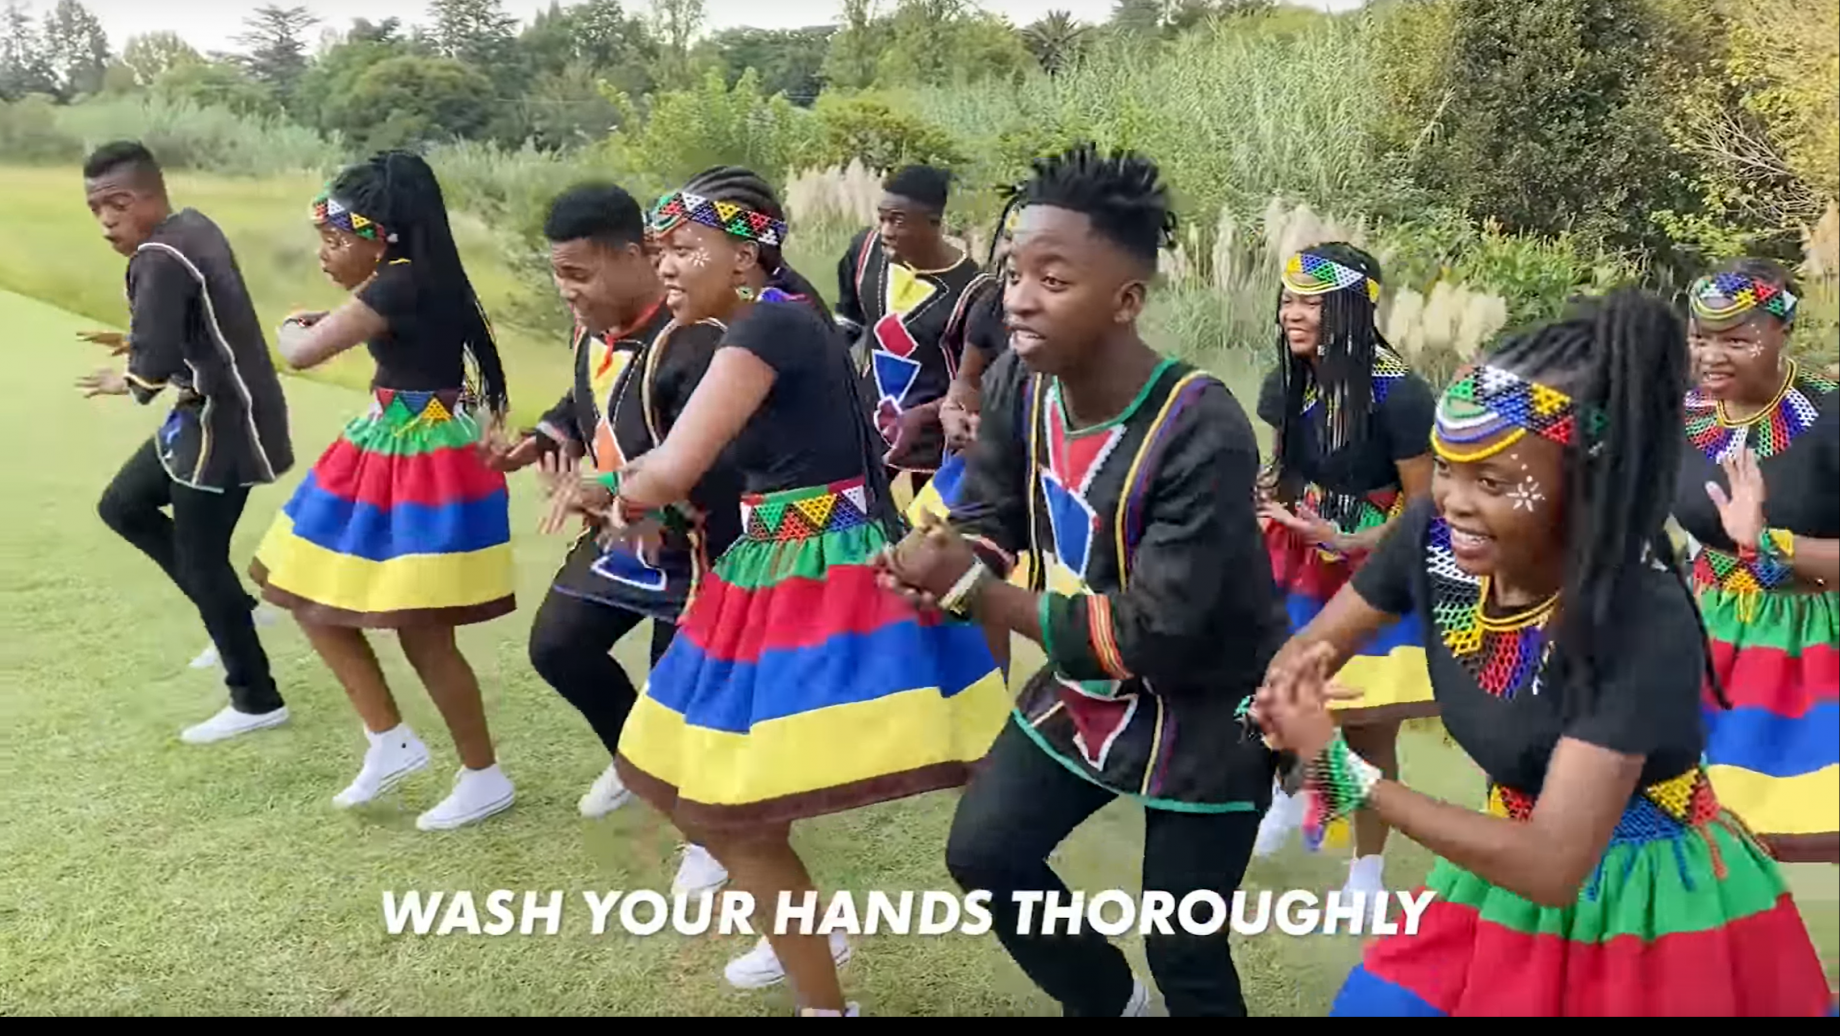 Screenshot from the video of Ndlovu Youth Choir